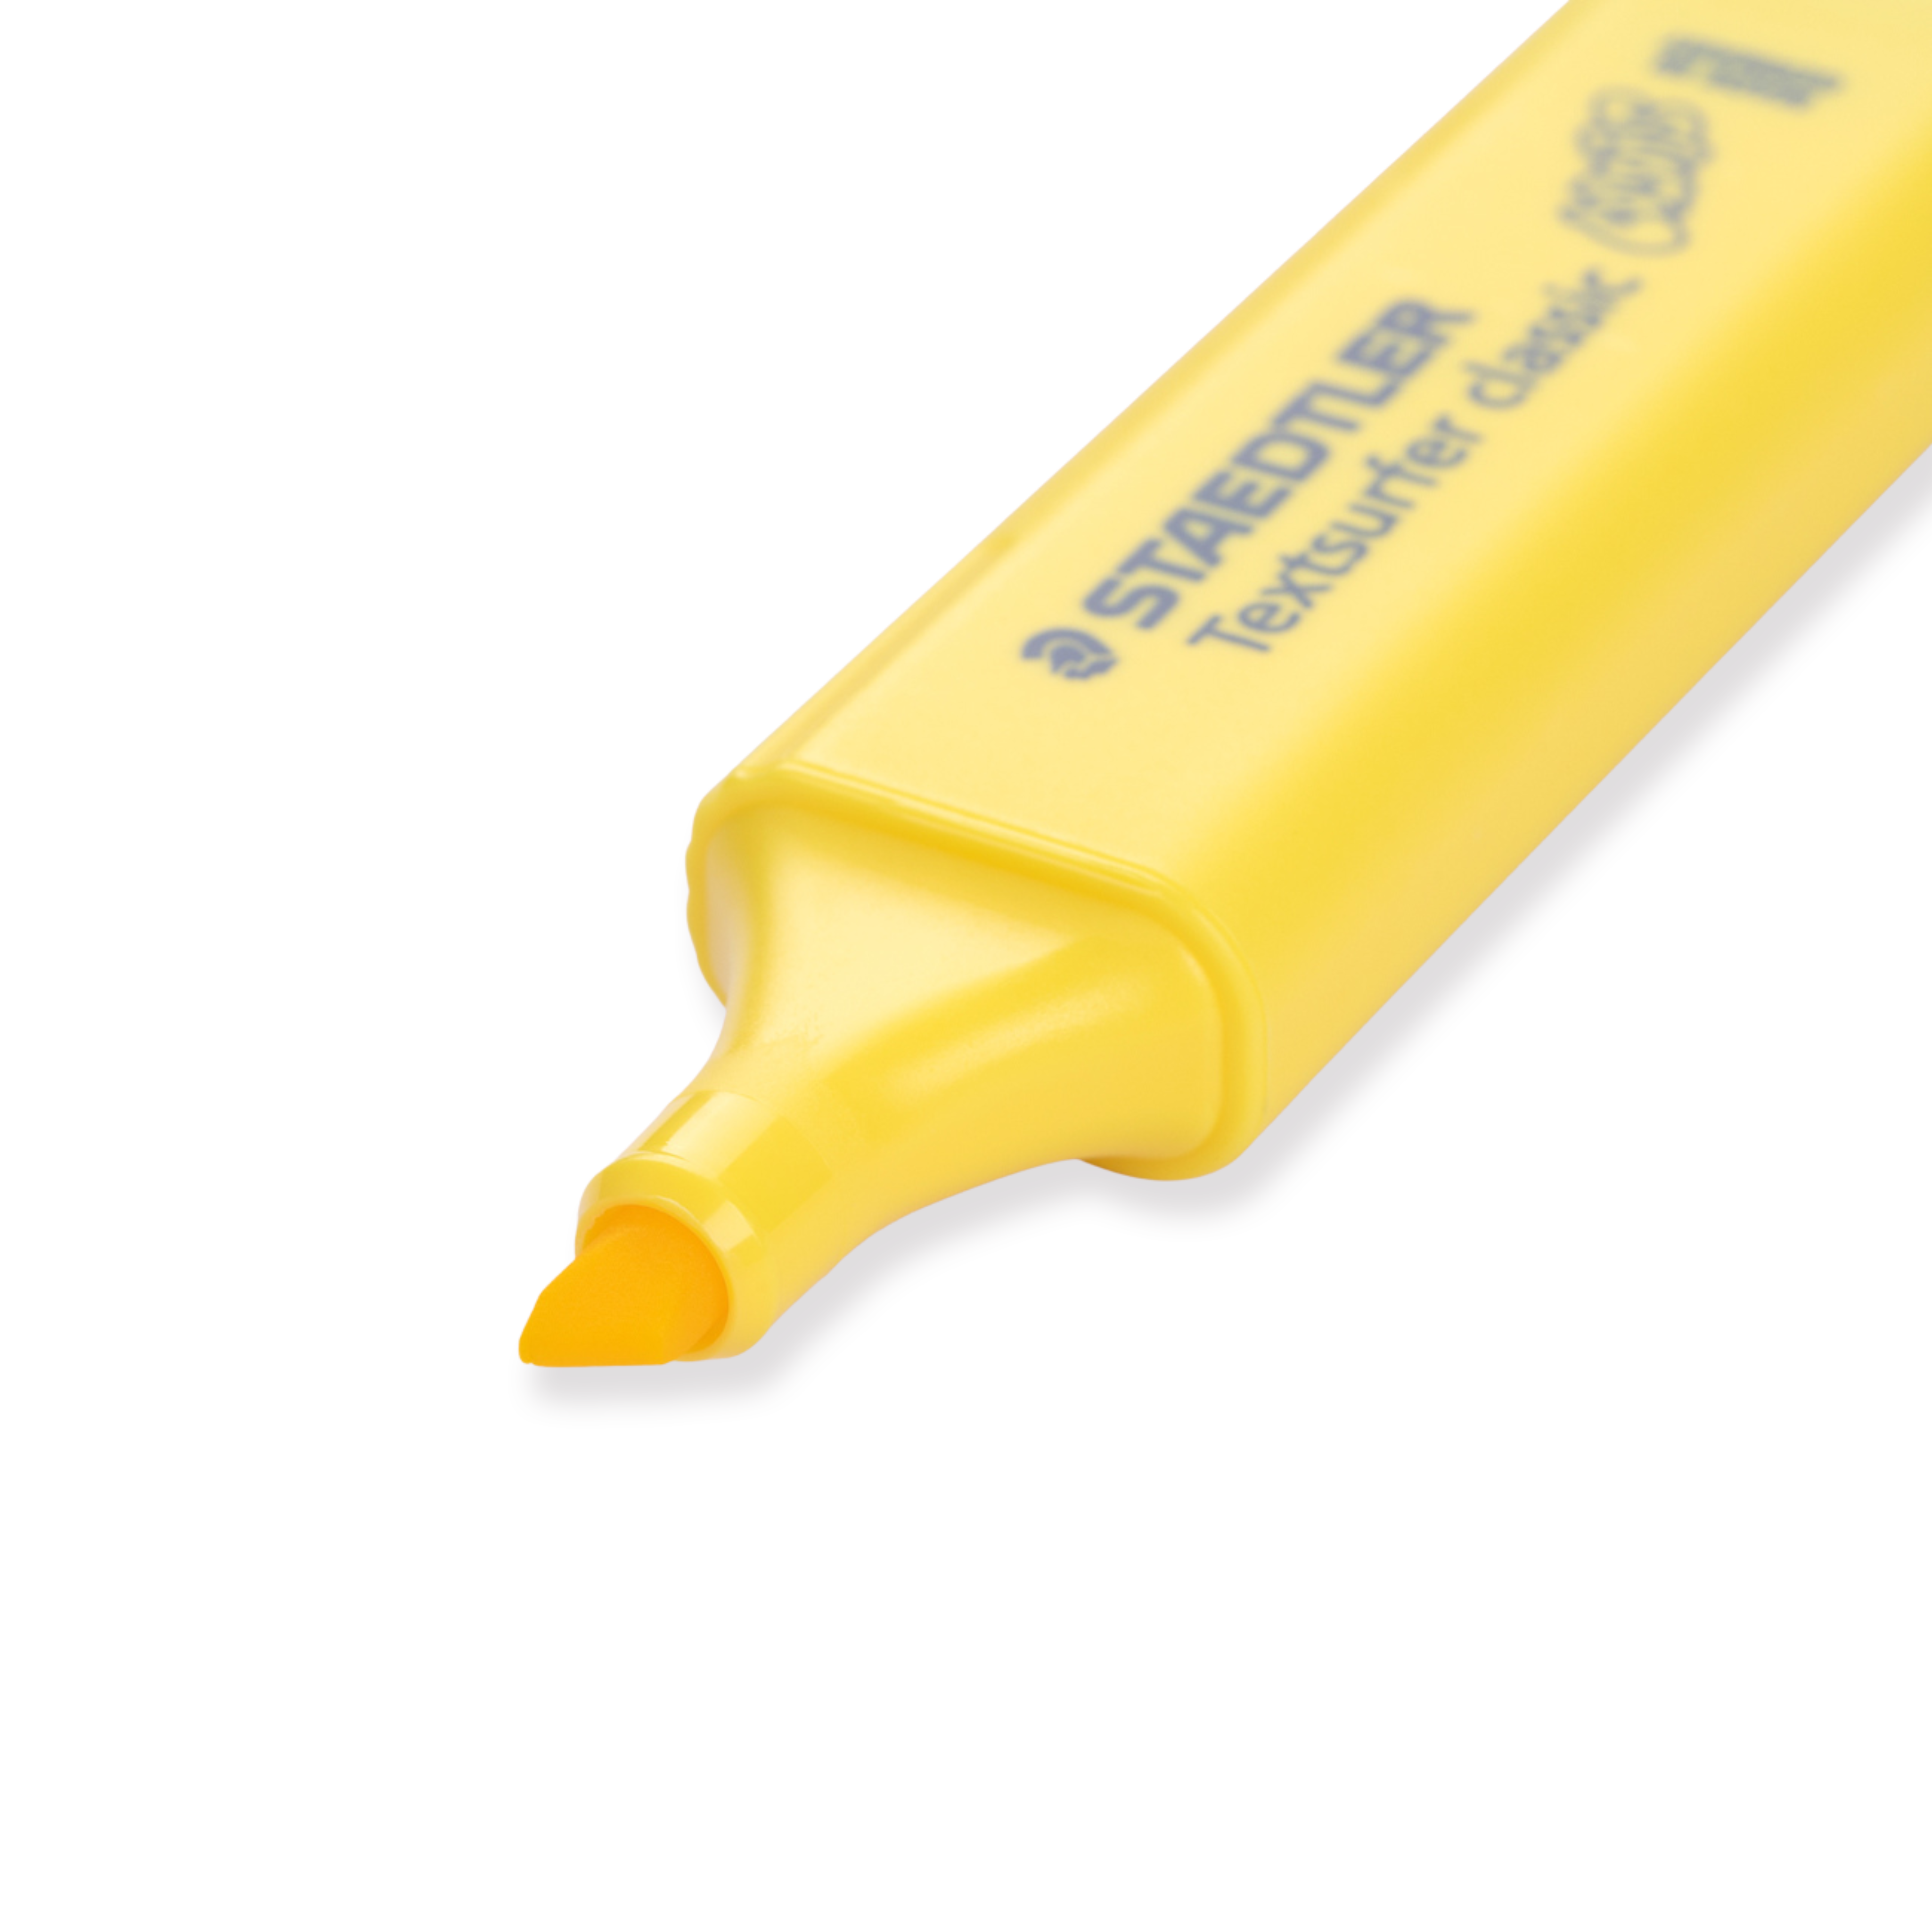 Staedtler Textsurfer Classic Highlighter Pen - Sunflower Yellow